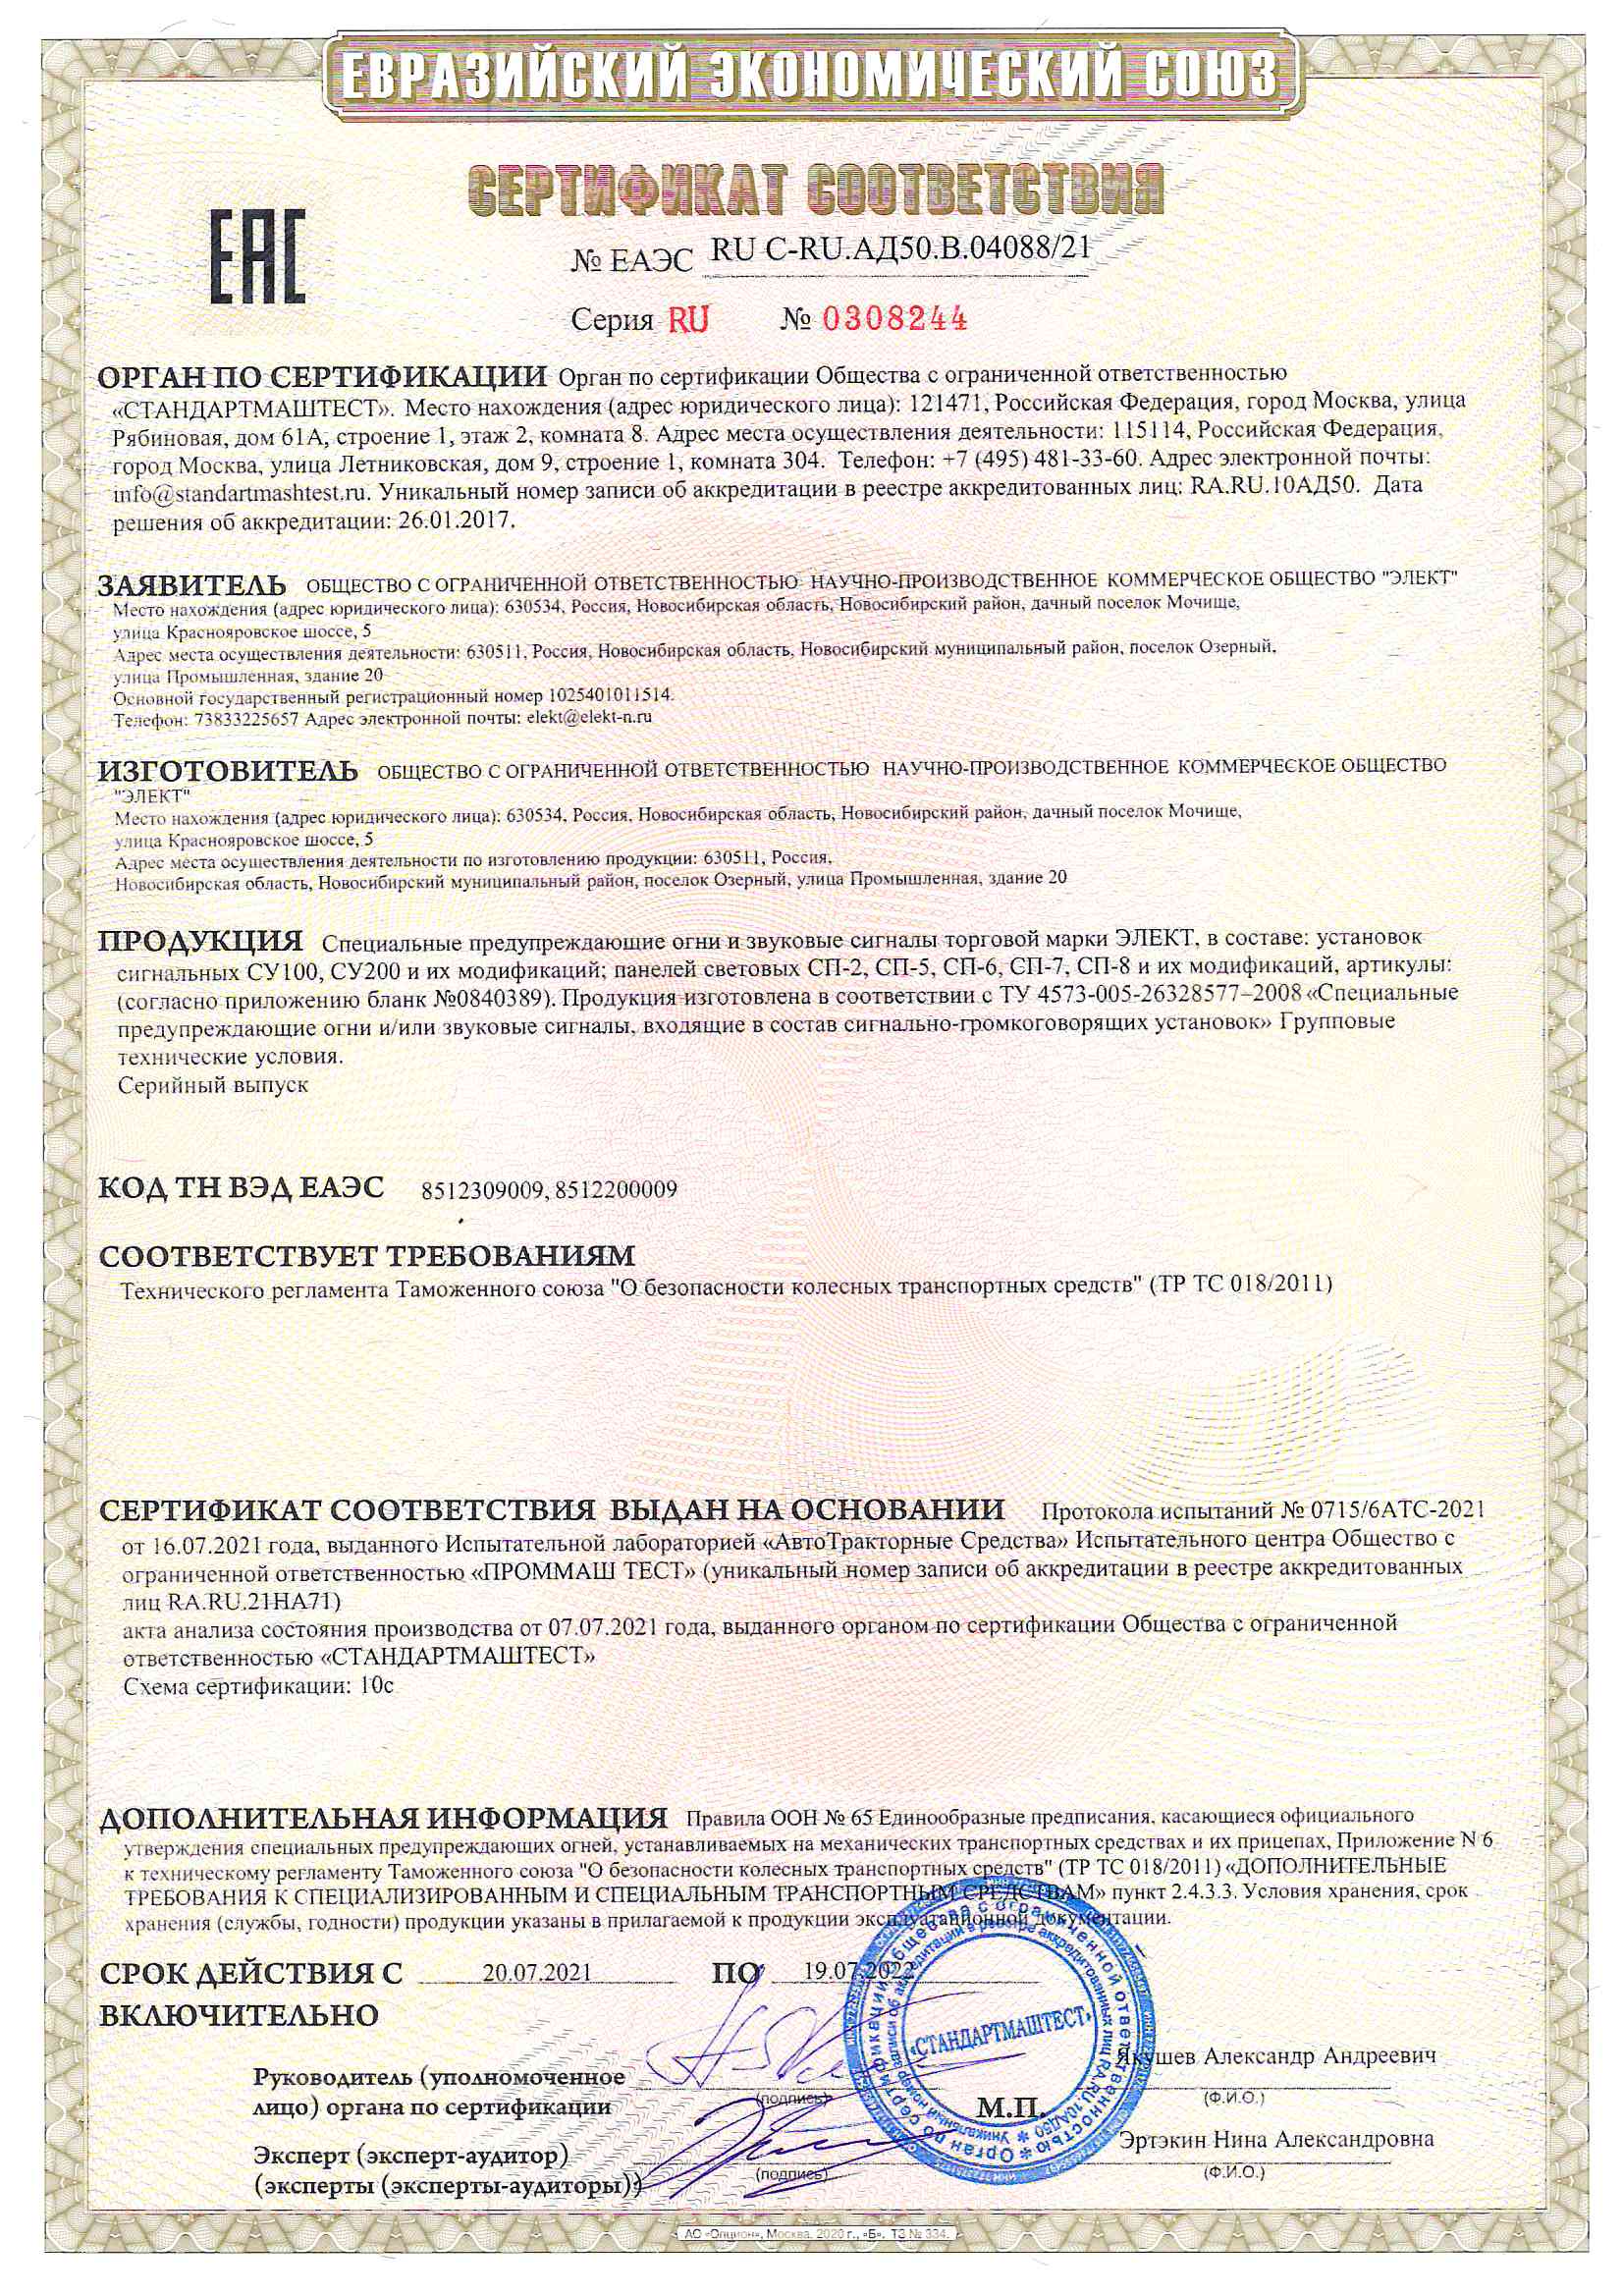 sertificat_sootvetstviya_21-22-1